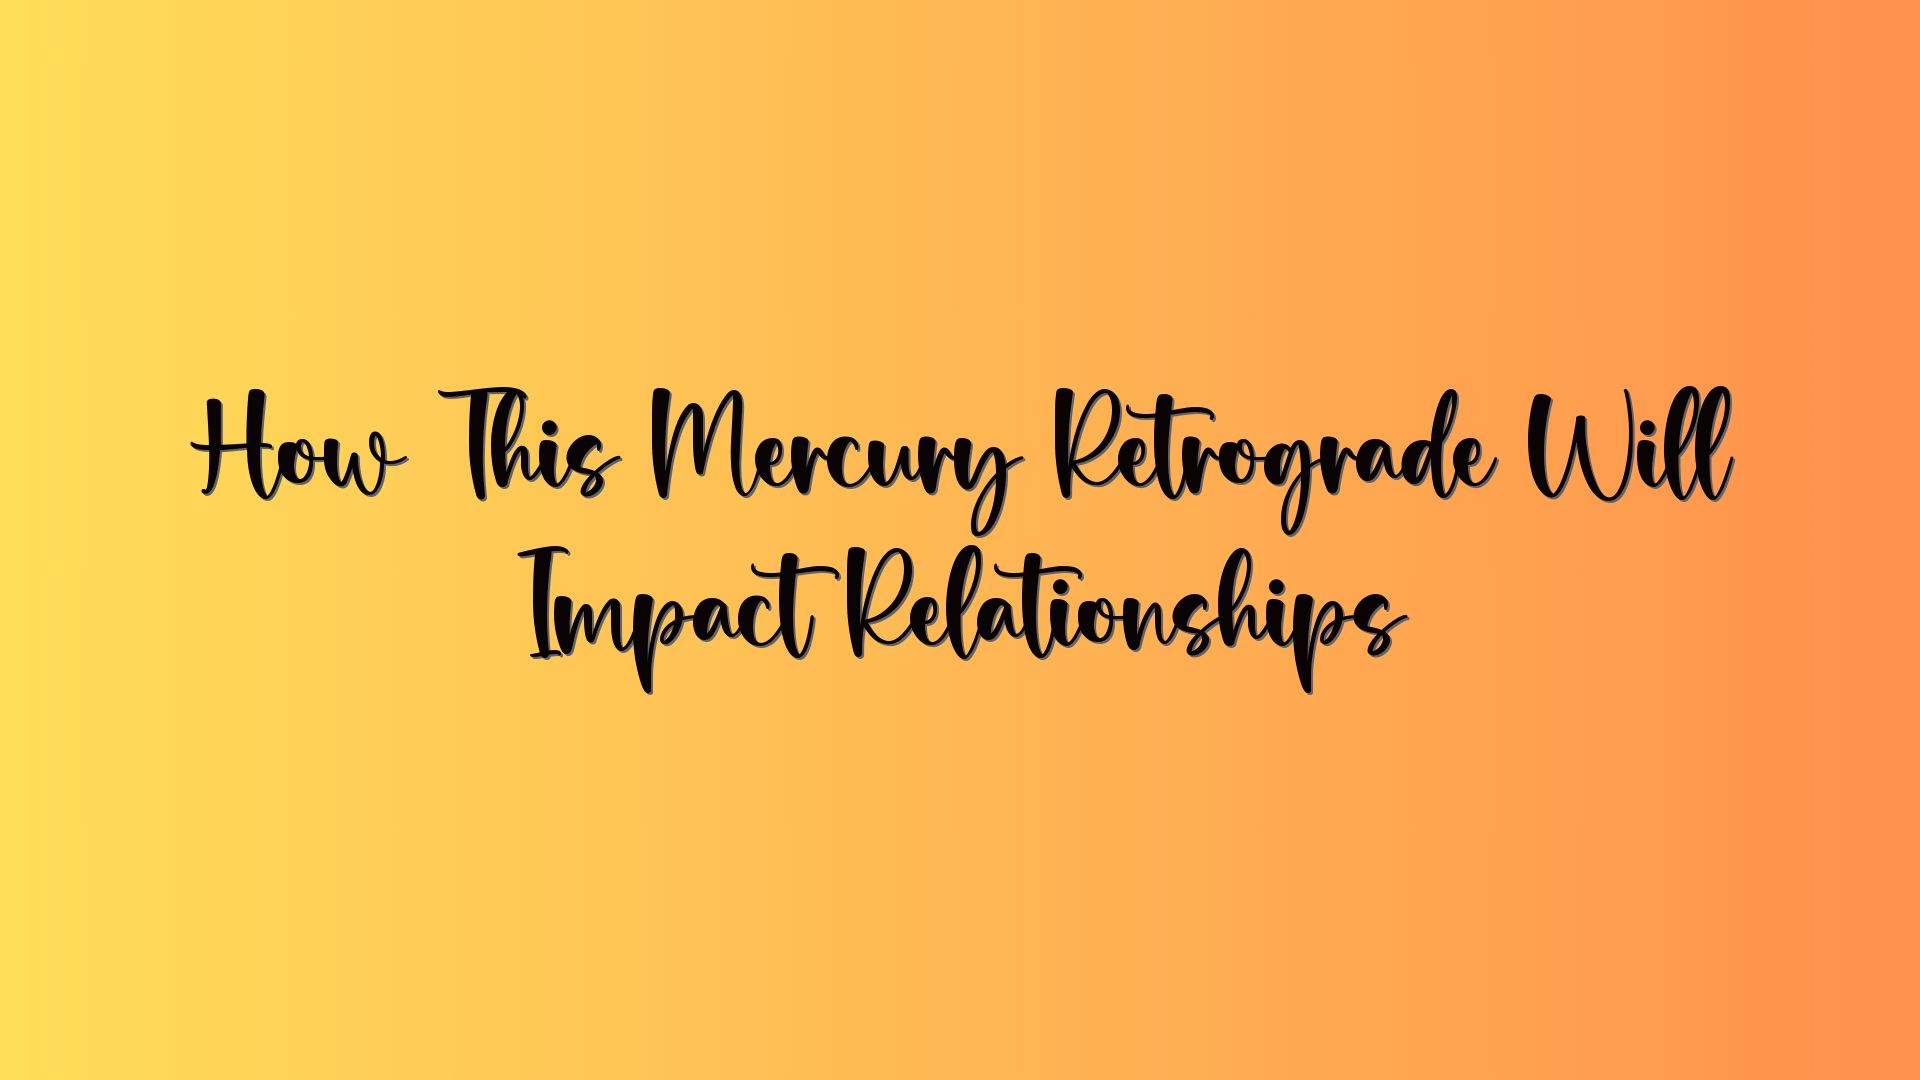 How This Mercury Retrograde Will Impact Relationships